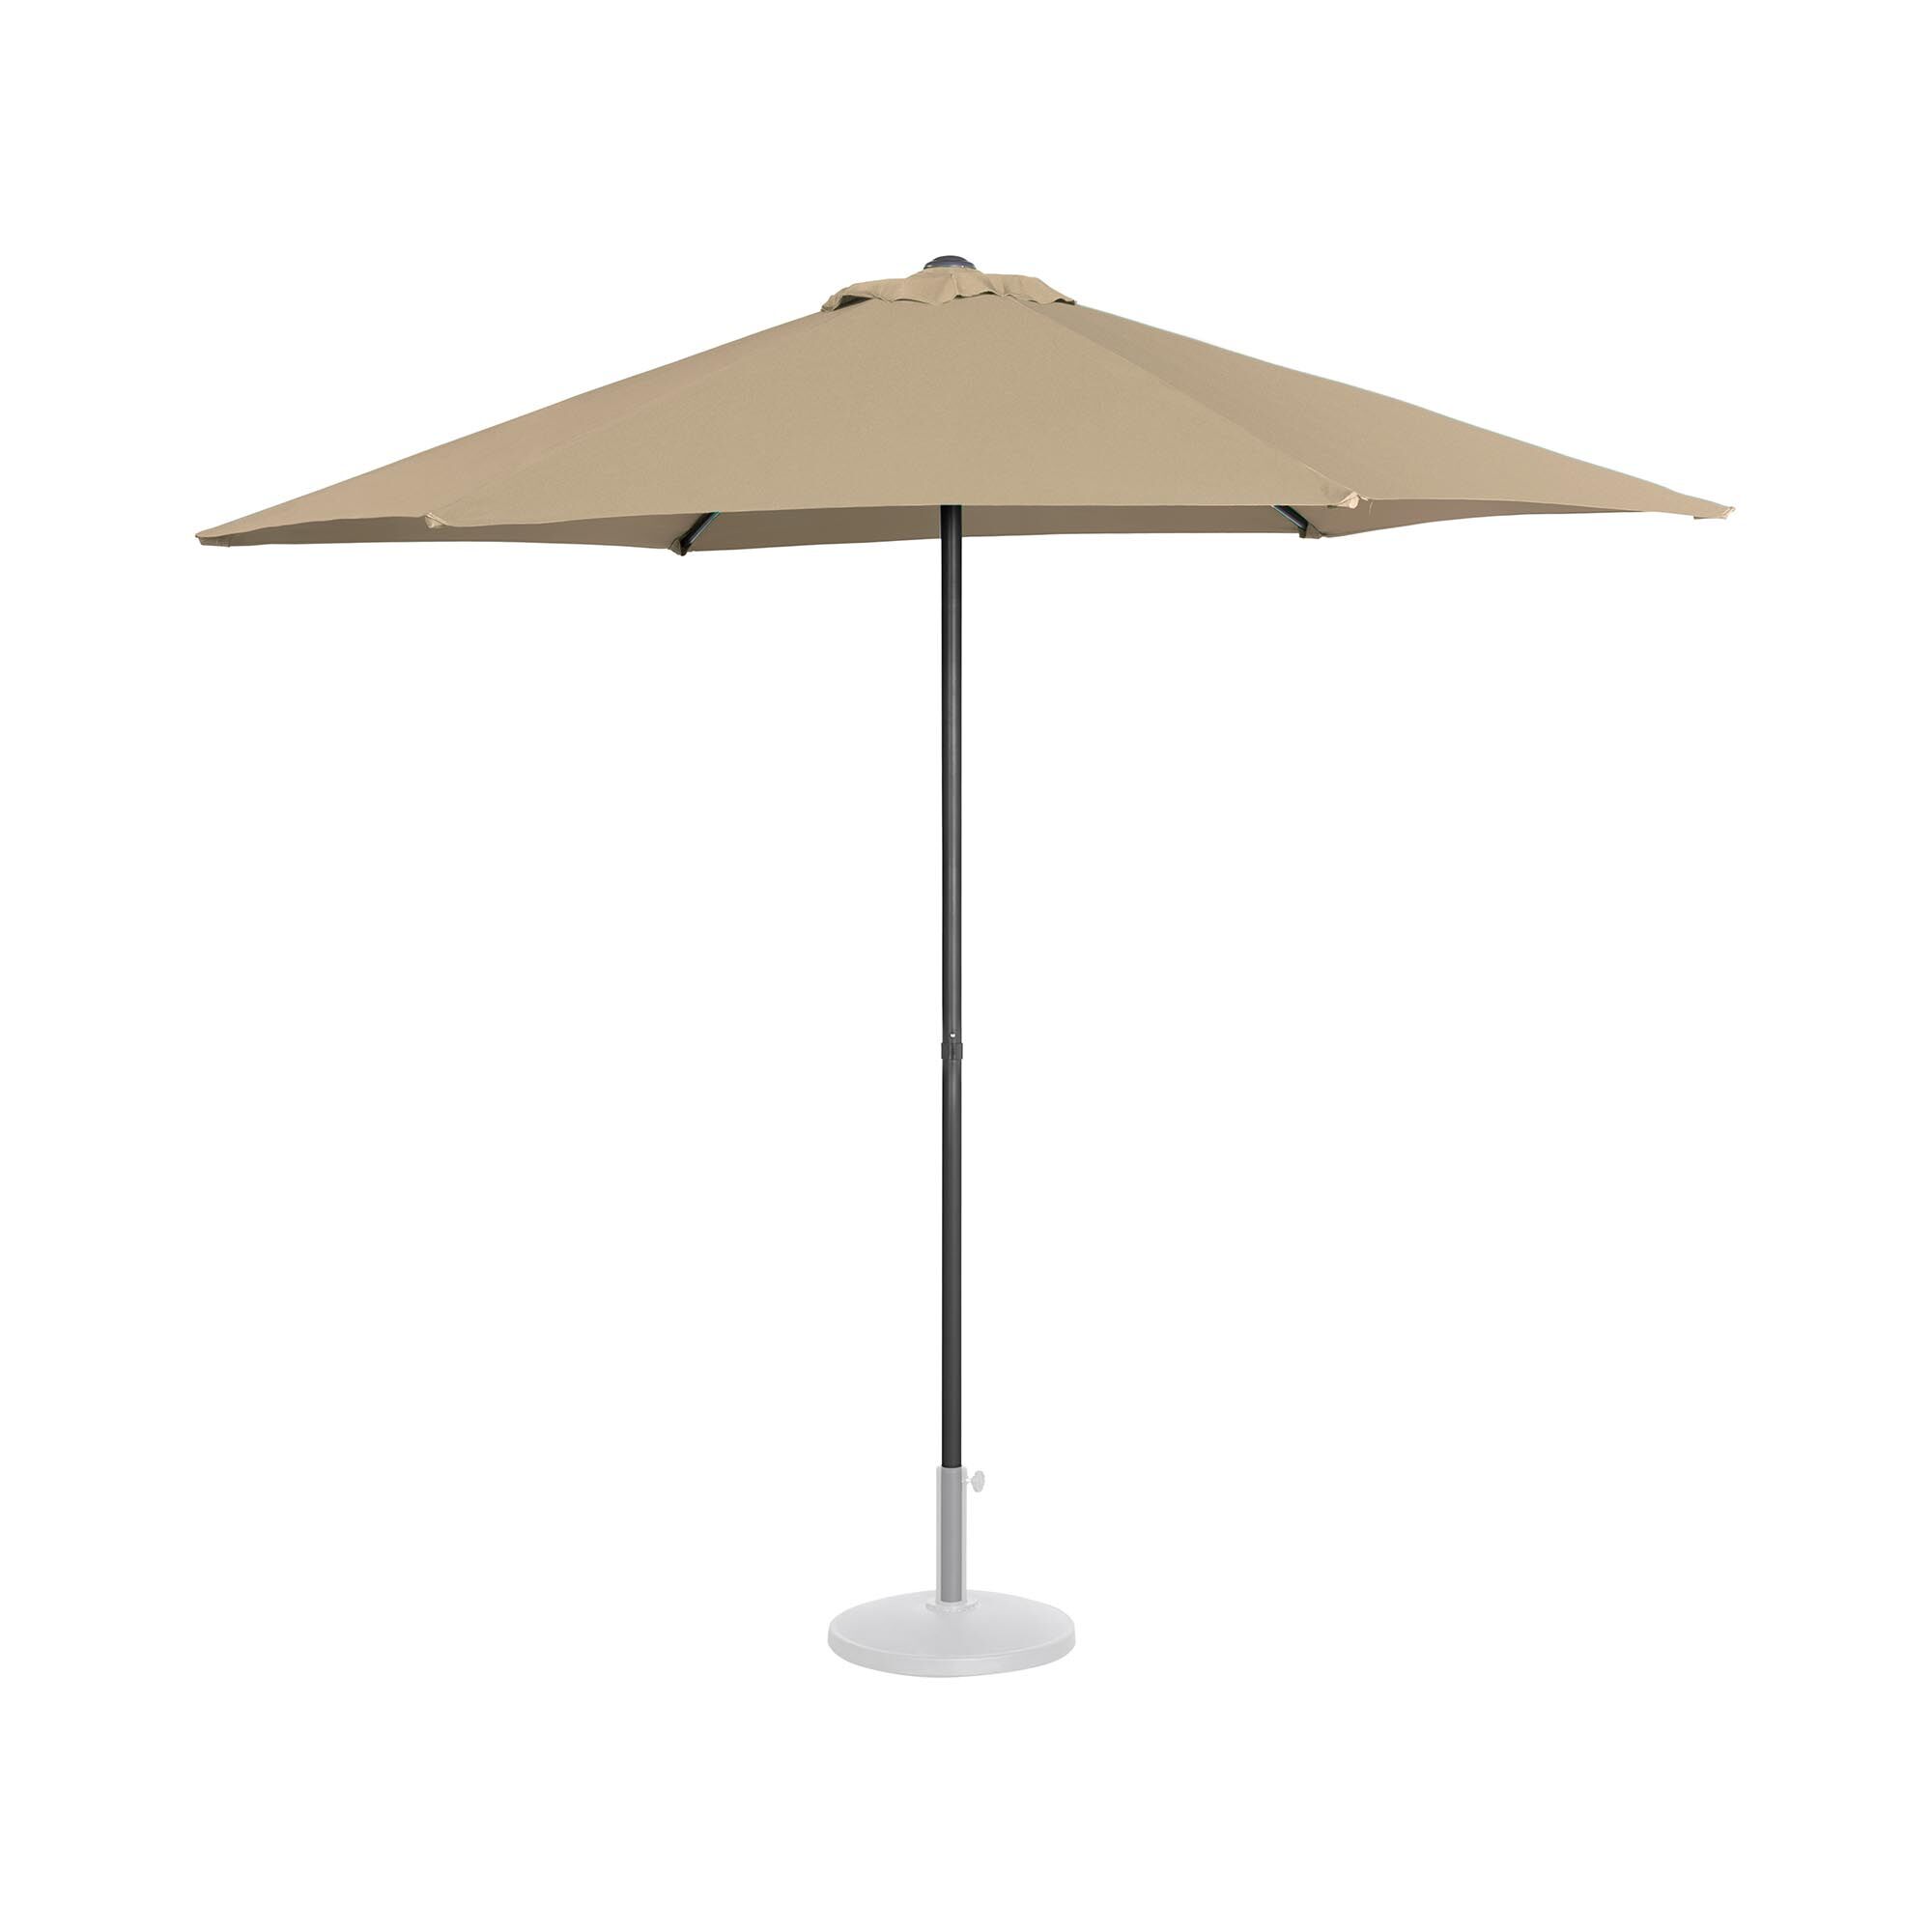 Uniprodo Large Outdoor Umbrella - taupe - hexagonal - Ø 270 cm